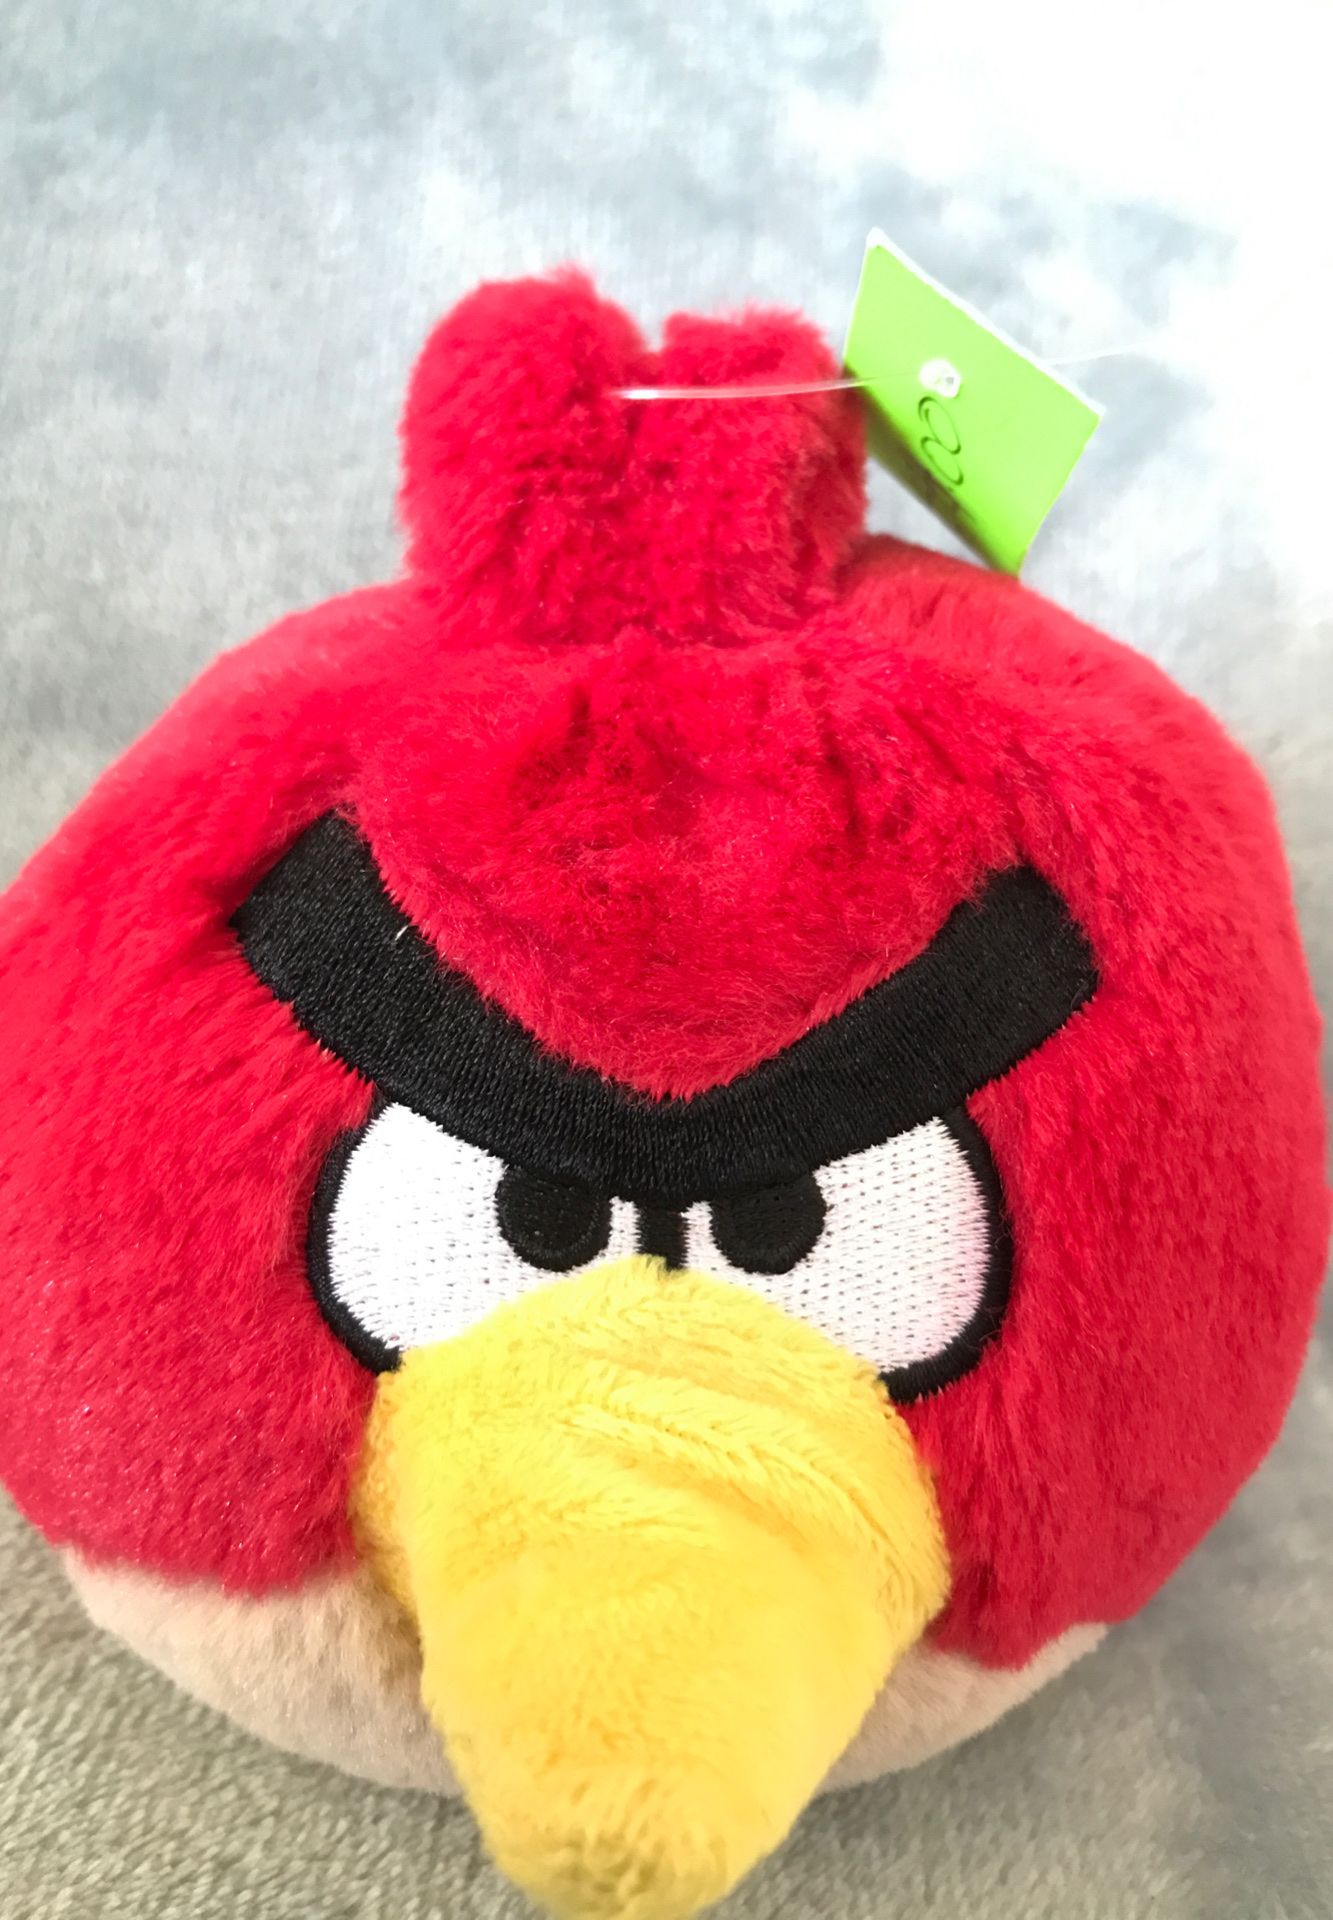 4.5” angry Birds stuffed animal